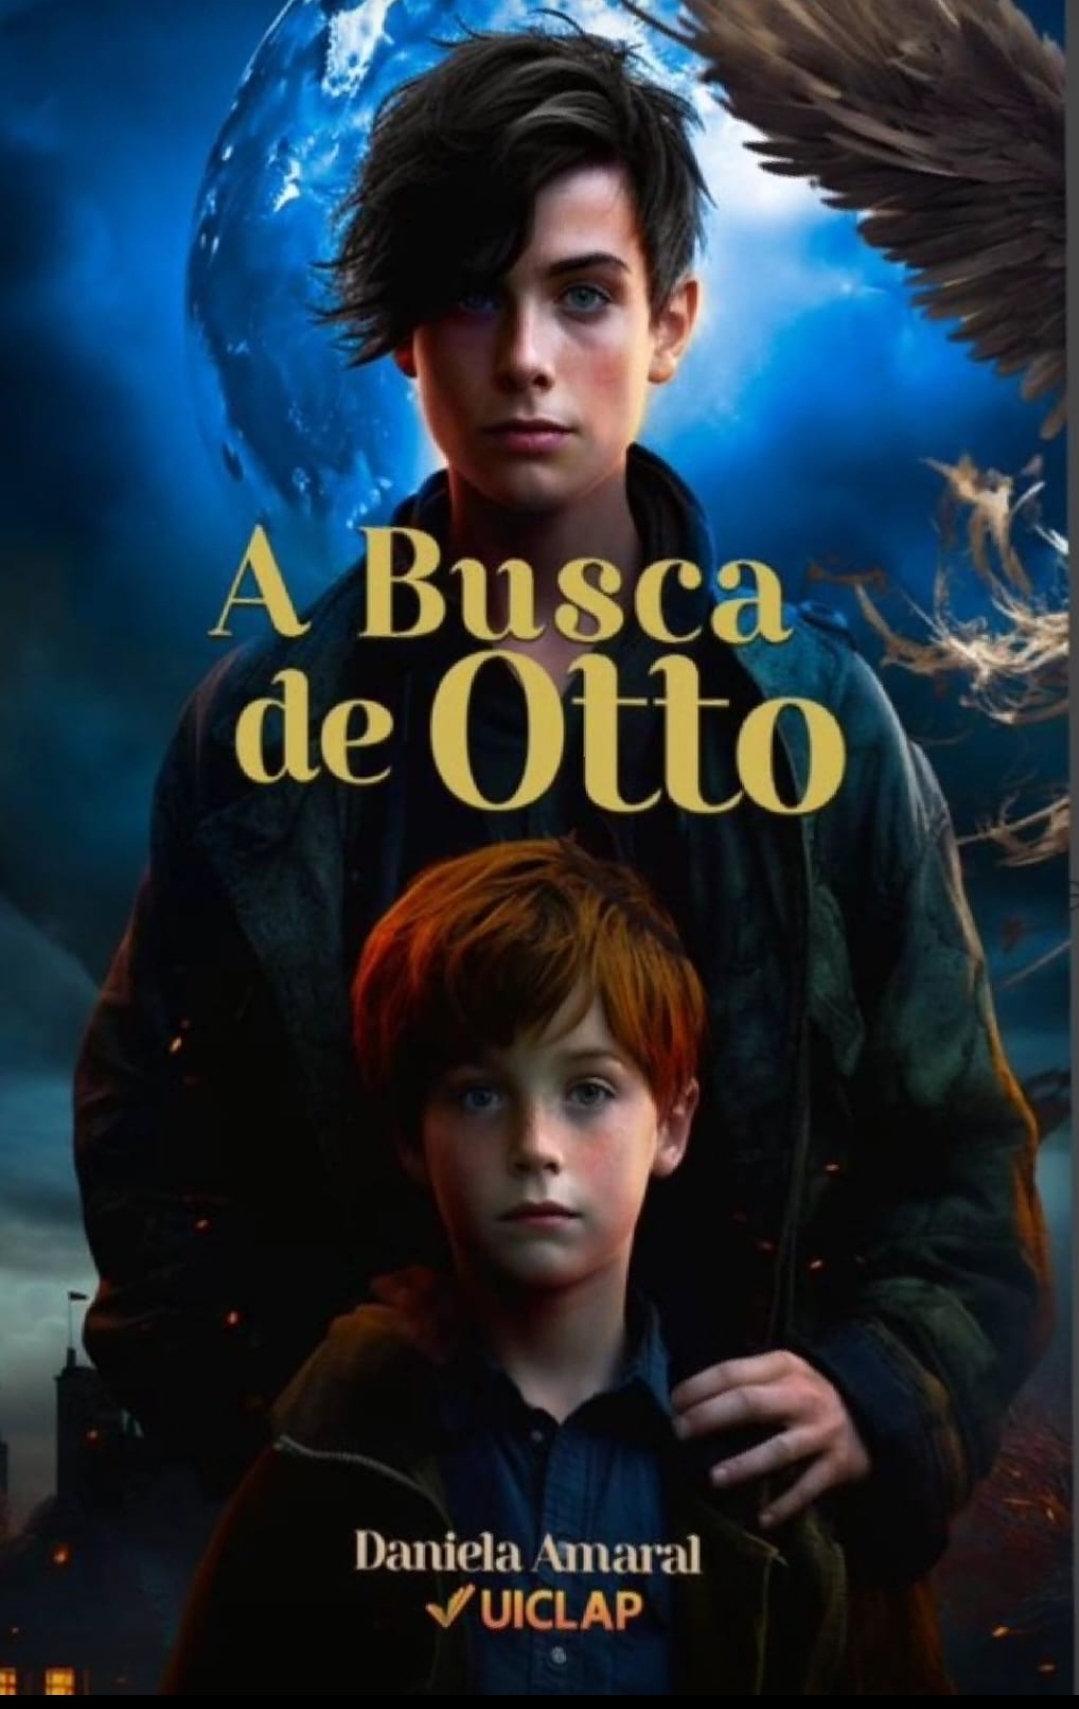 Capa do livro 'A busca de Otto', de Daniela Amaral, pela Editora Uiclap